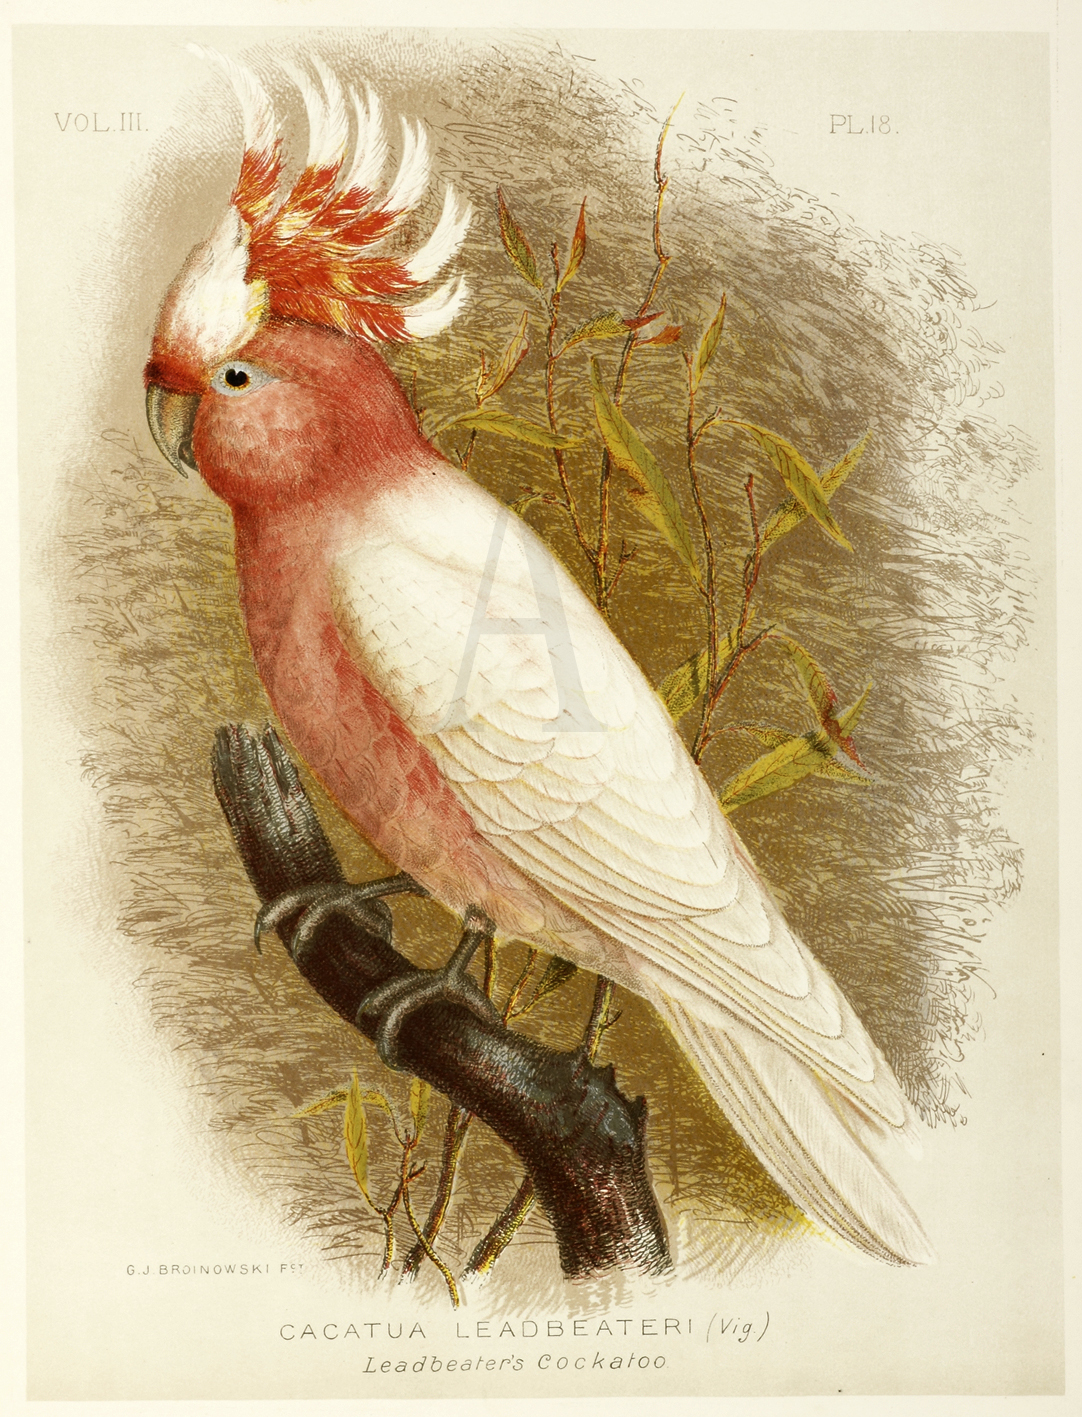 Cacatua Leadbeateri. Leadbeater's   cockatoo. - Antique Print from 1889